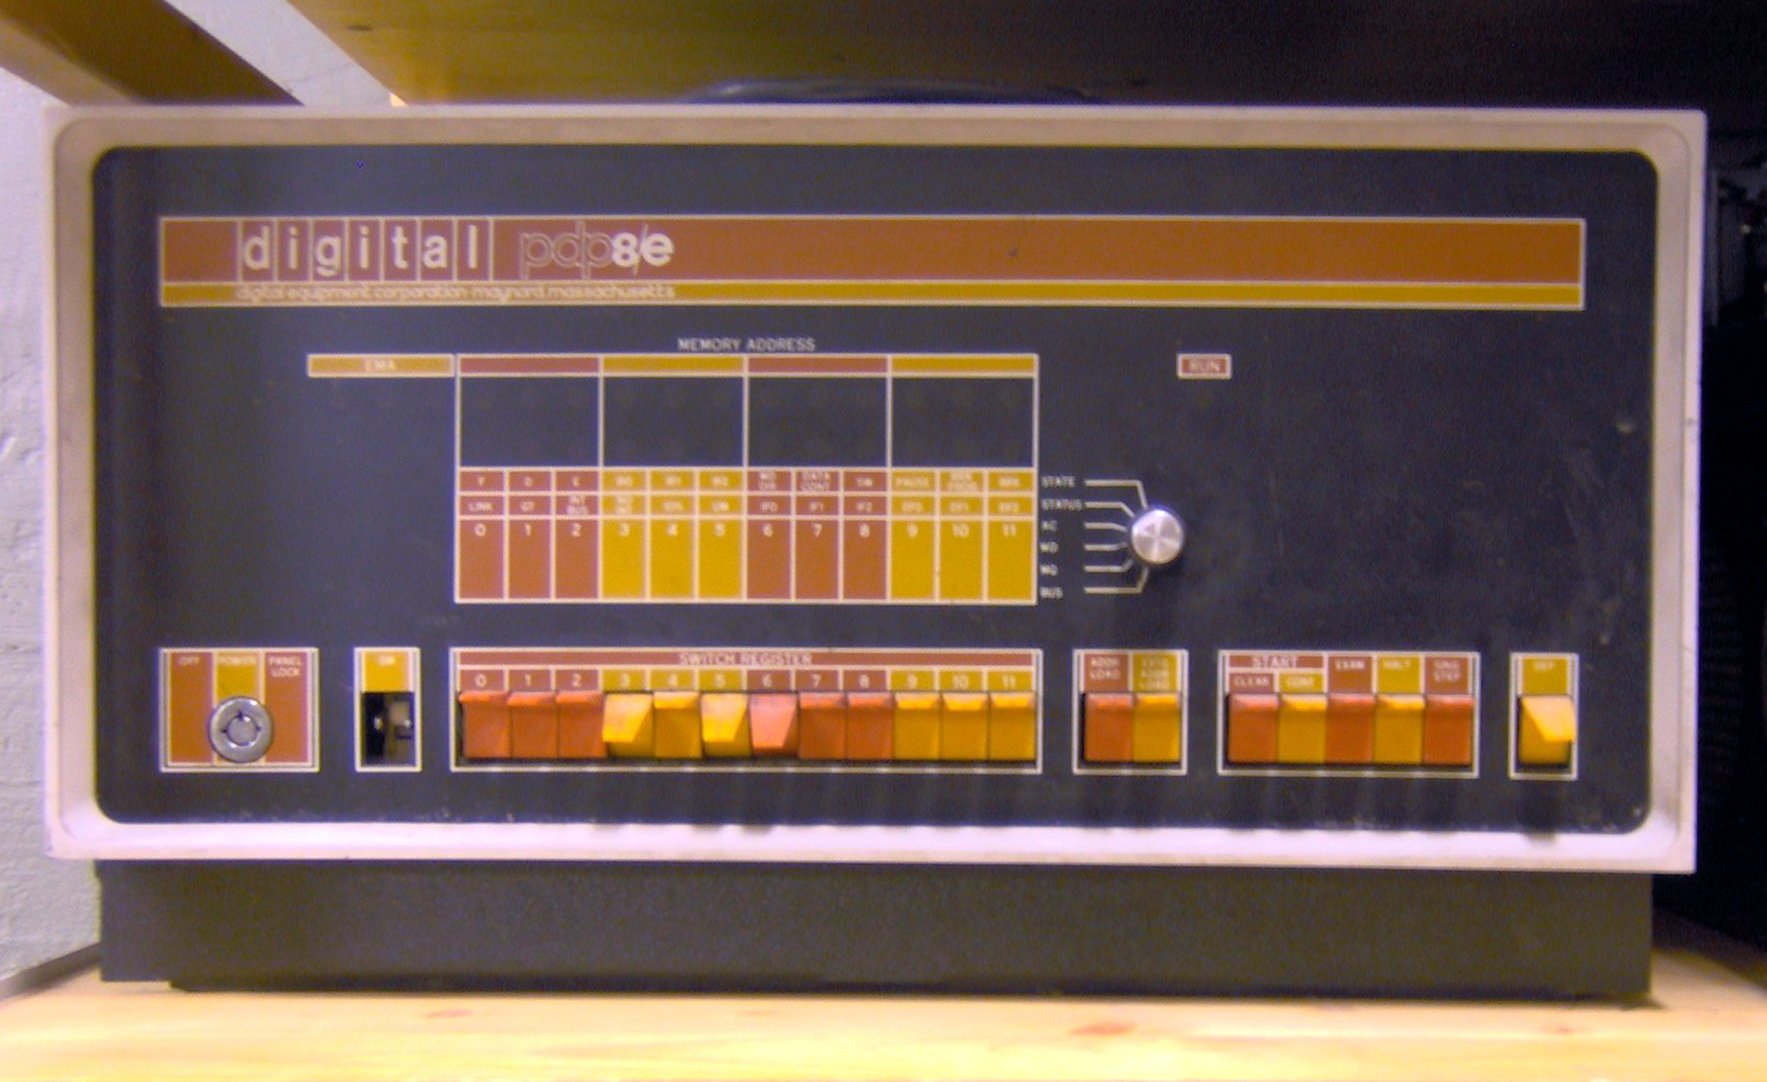 A PDP-8/E minicomputer